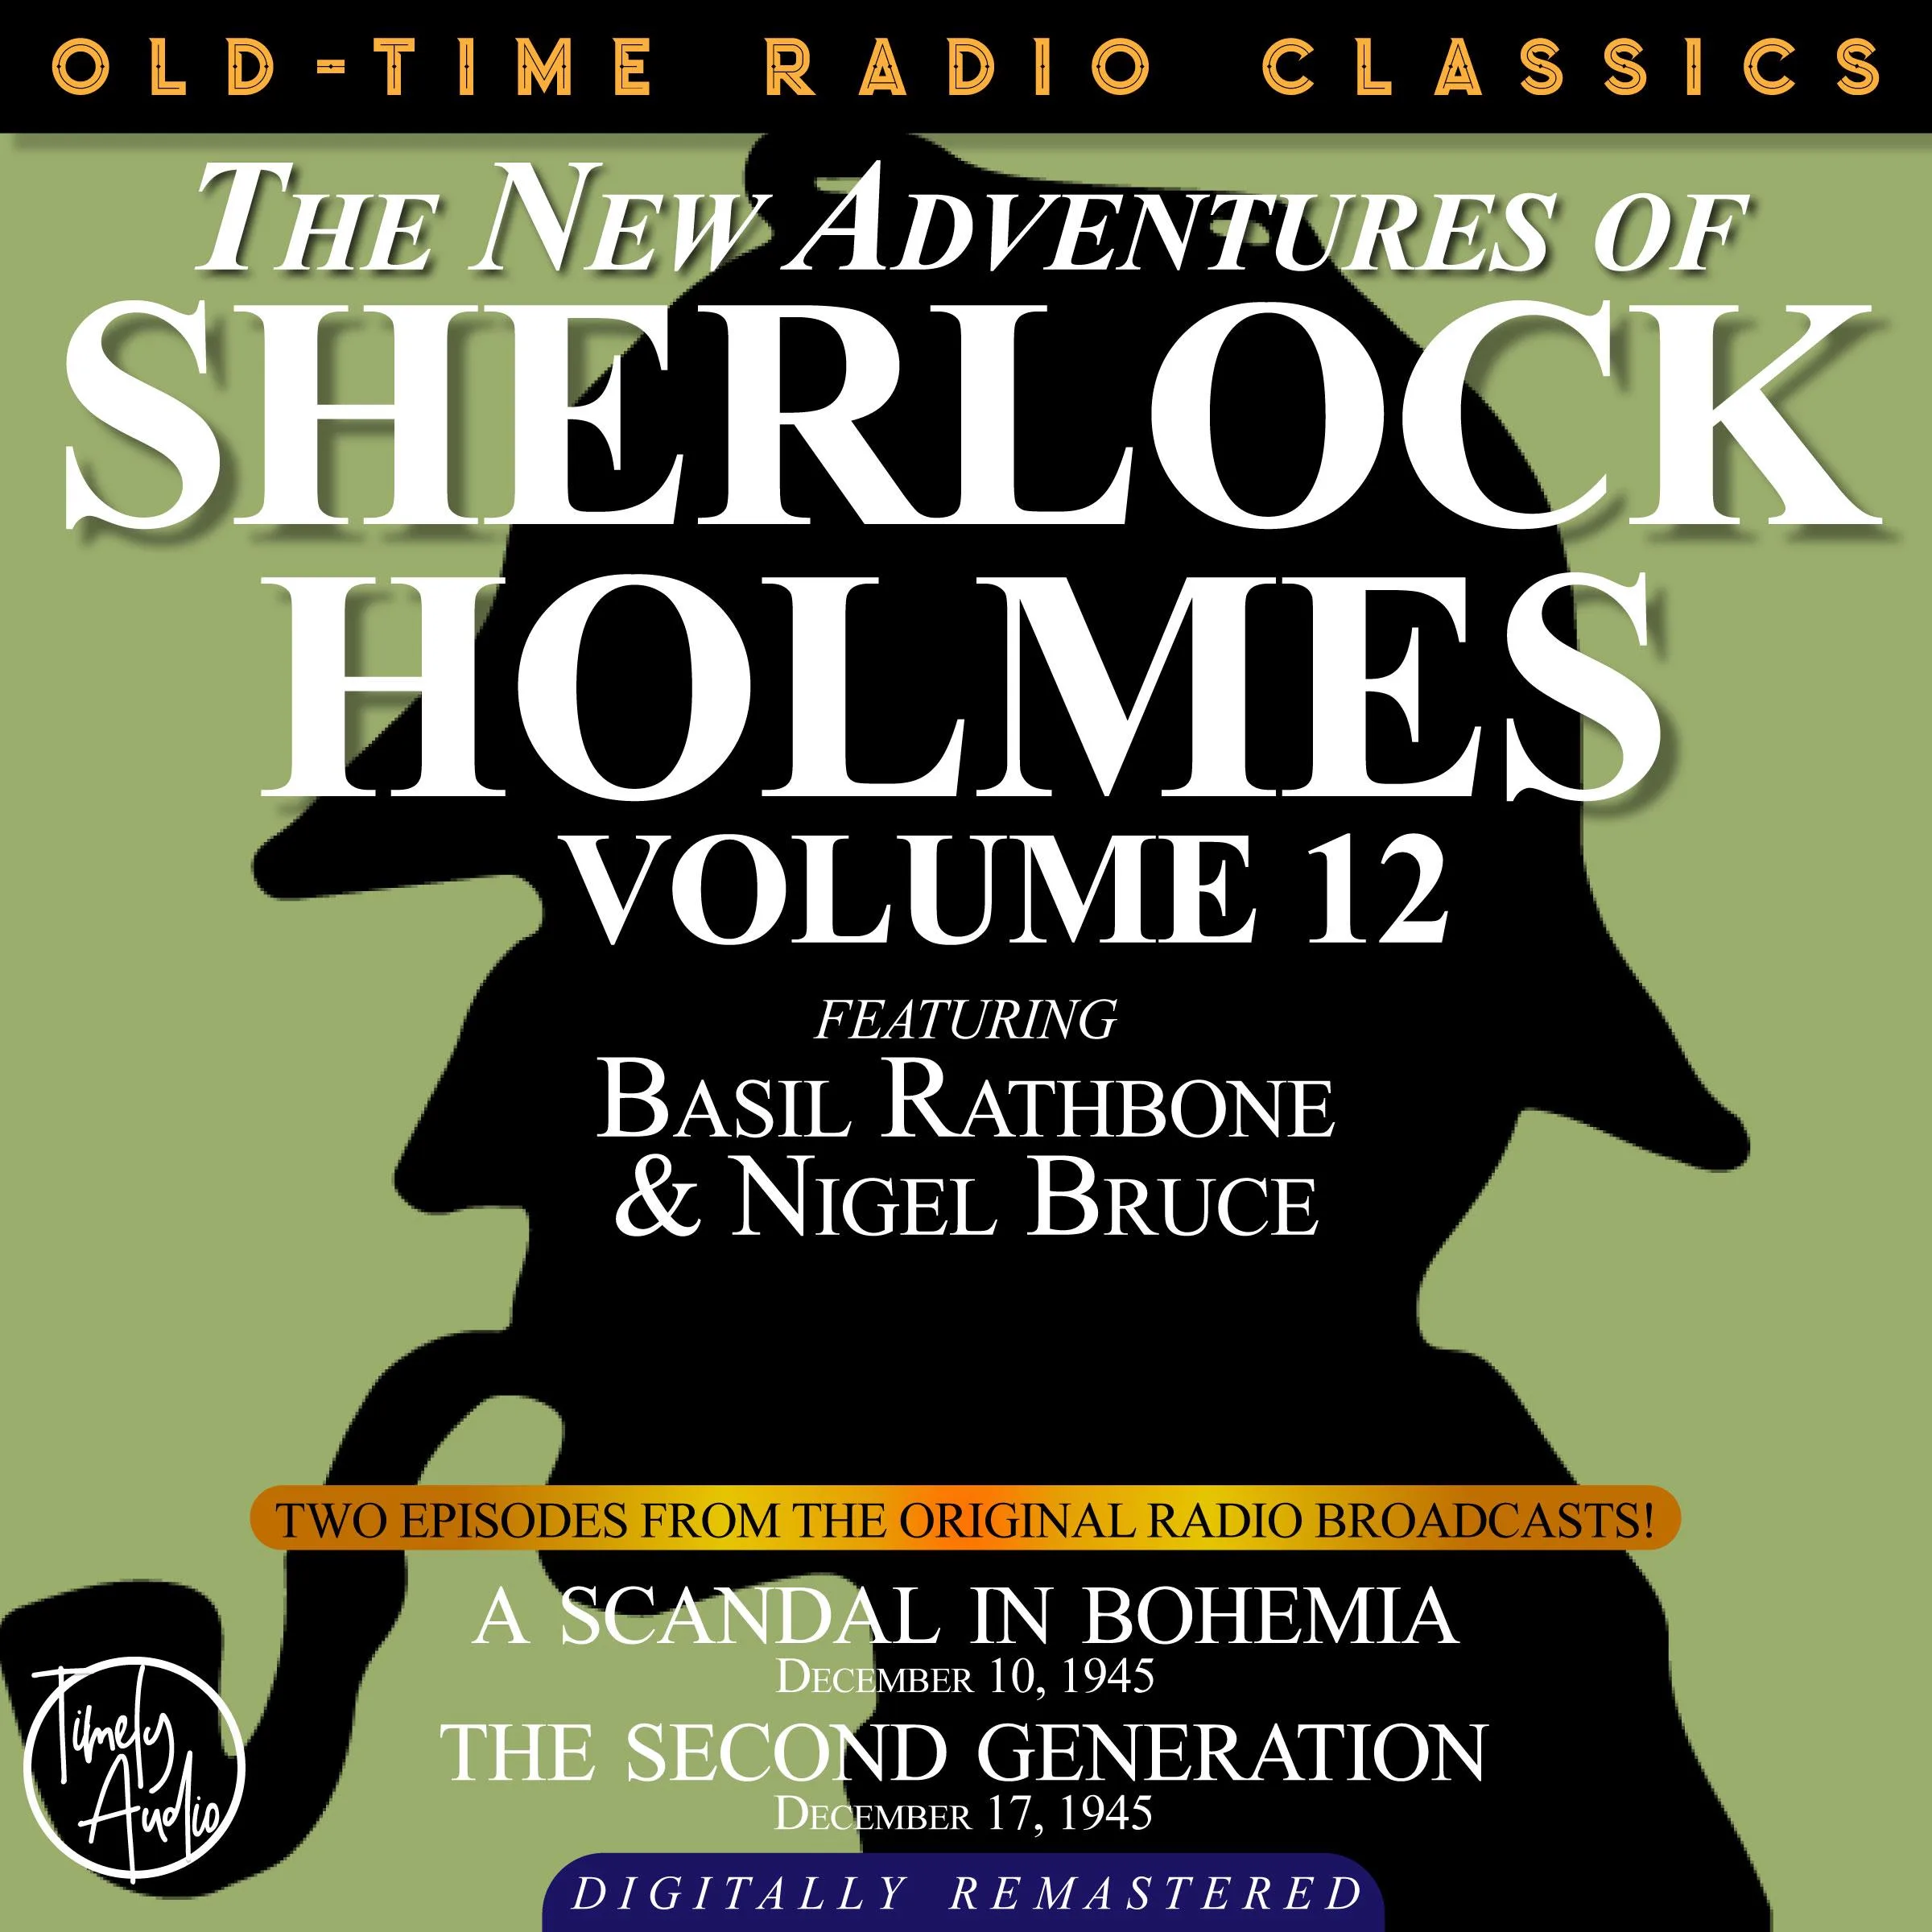 THE NEW ADVENTURES OF SHERLOCK HOLMES, VOLUME 11